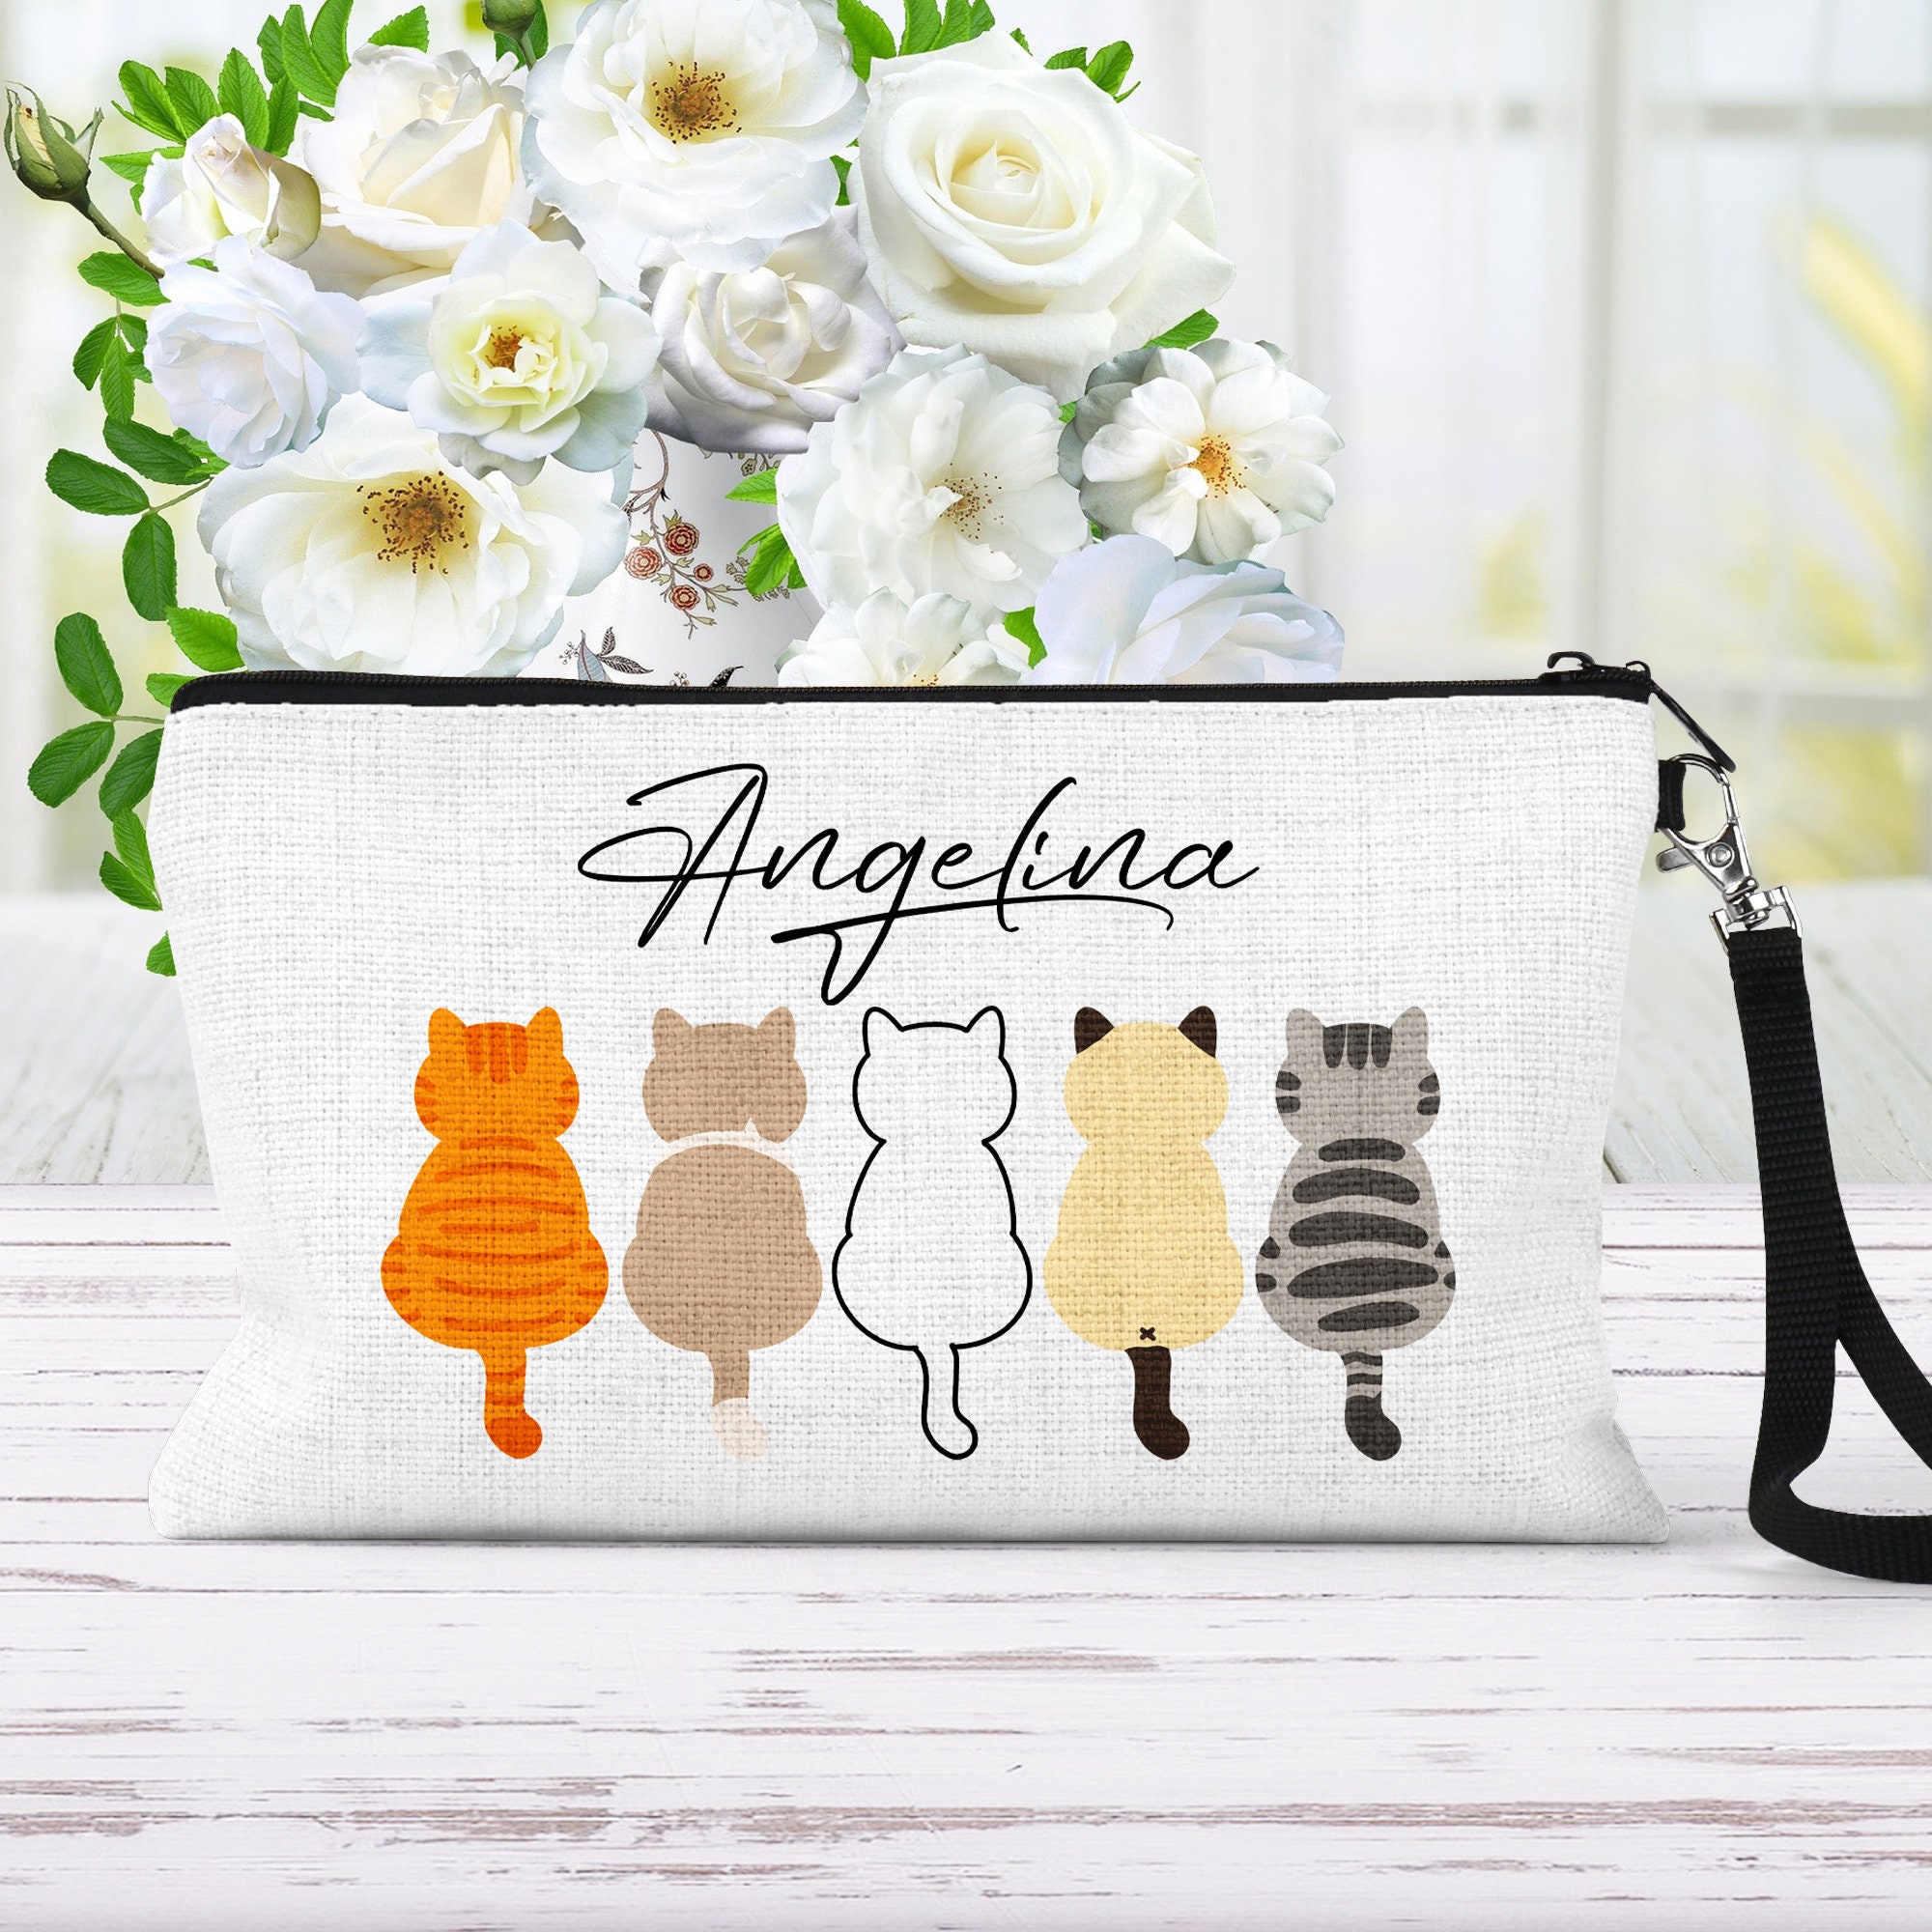 Flower/cat/dog Canvas Tote Bag, Kitten Handbag, Small Carry Bags